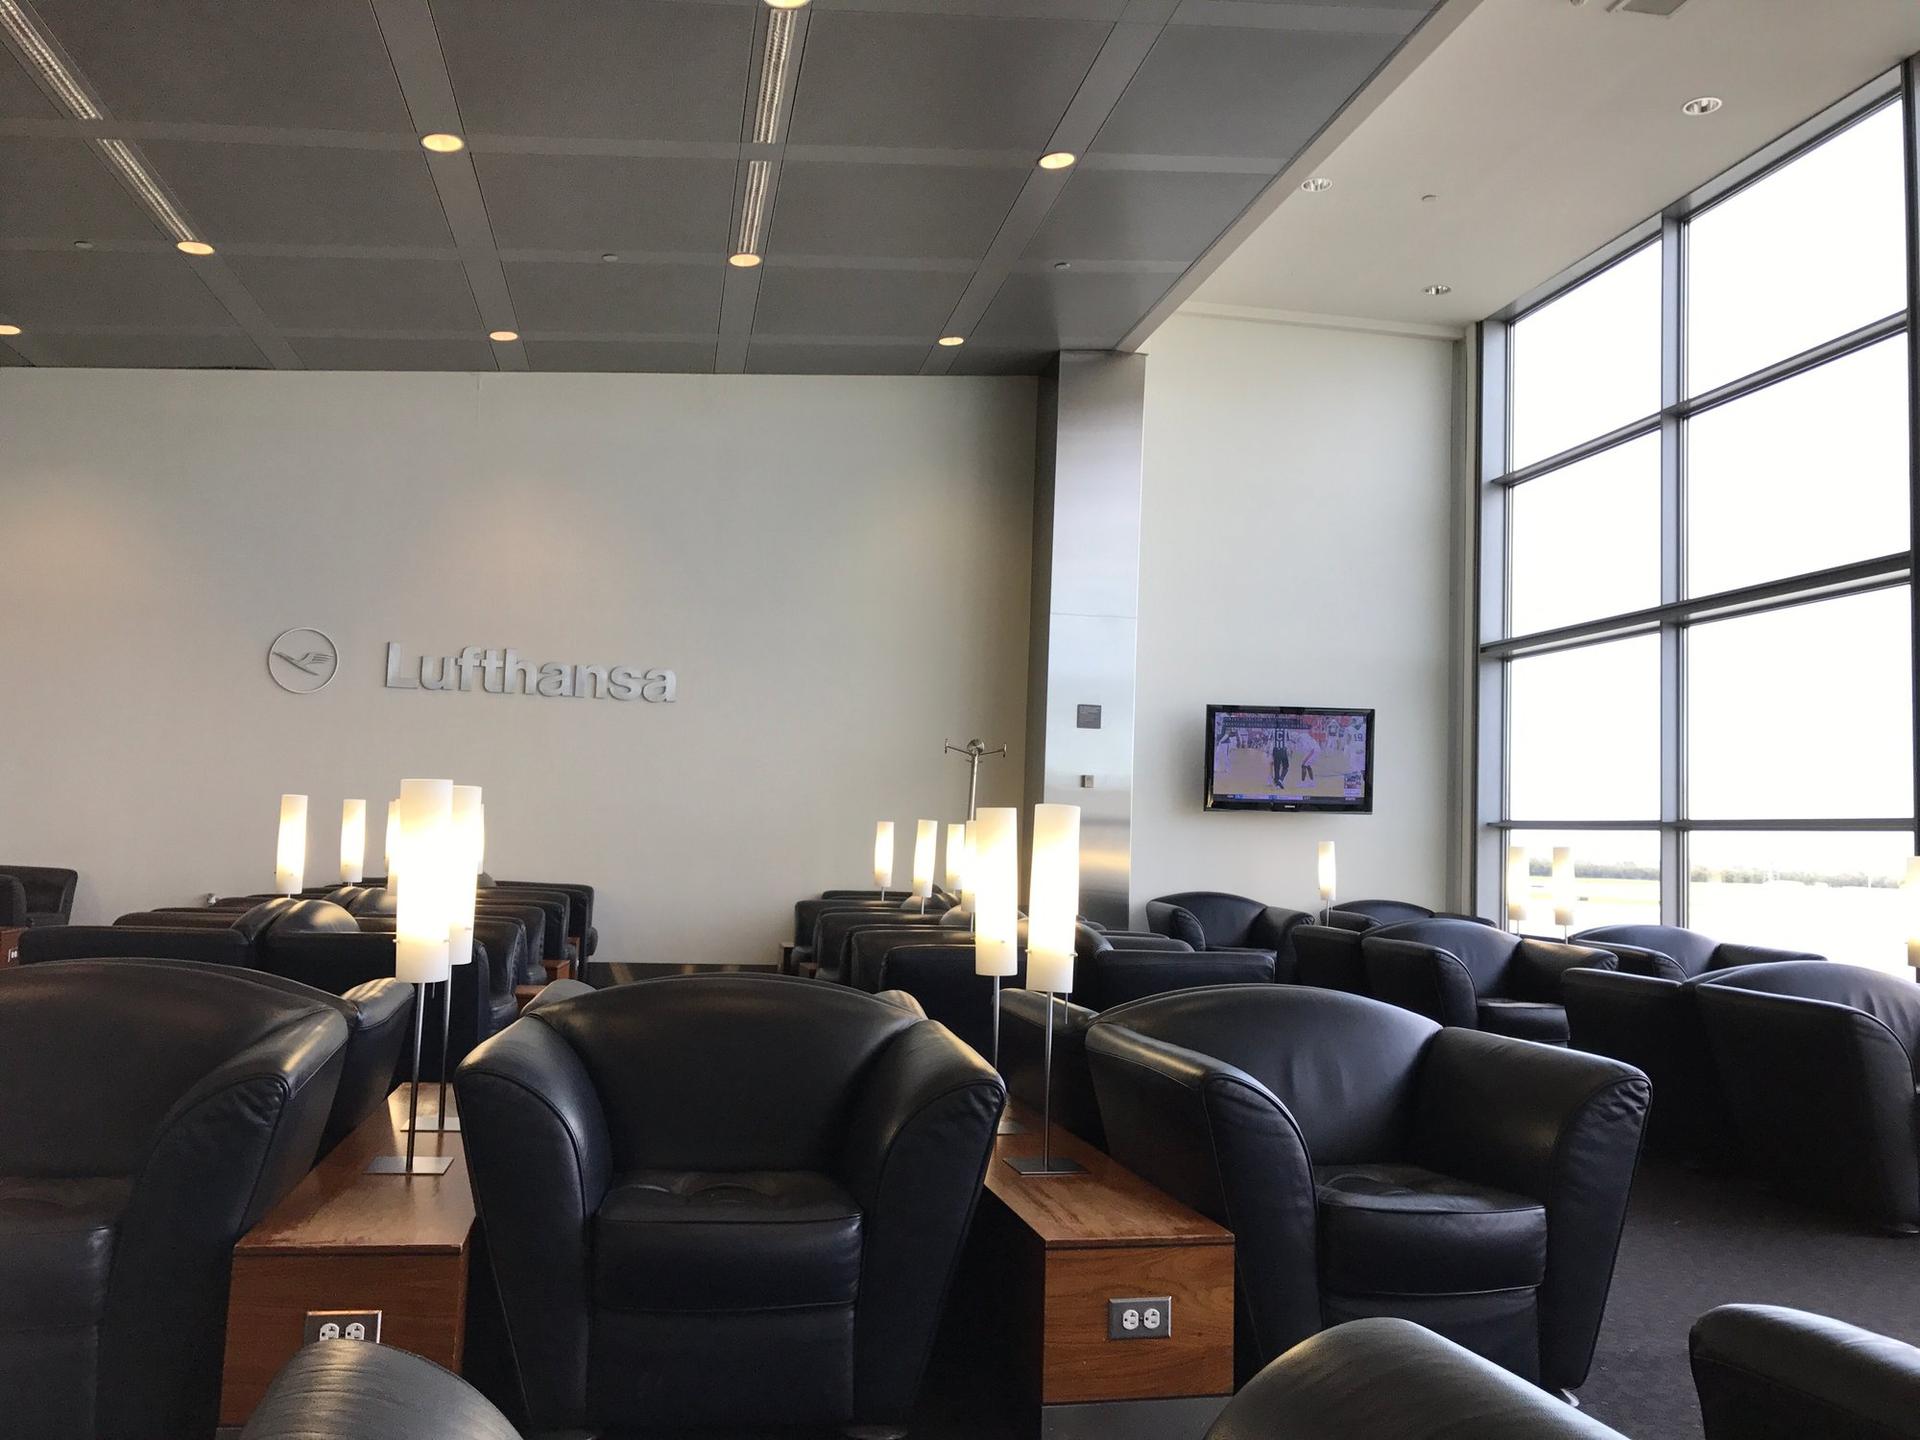 Lufthansa Senator Lounge  image 26 of 32